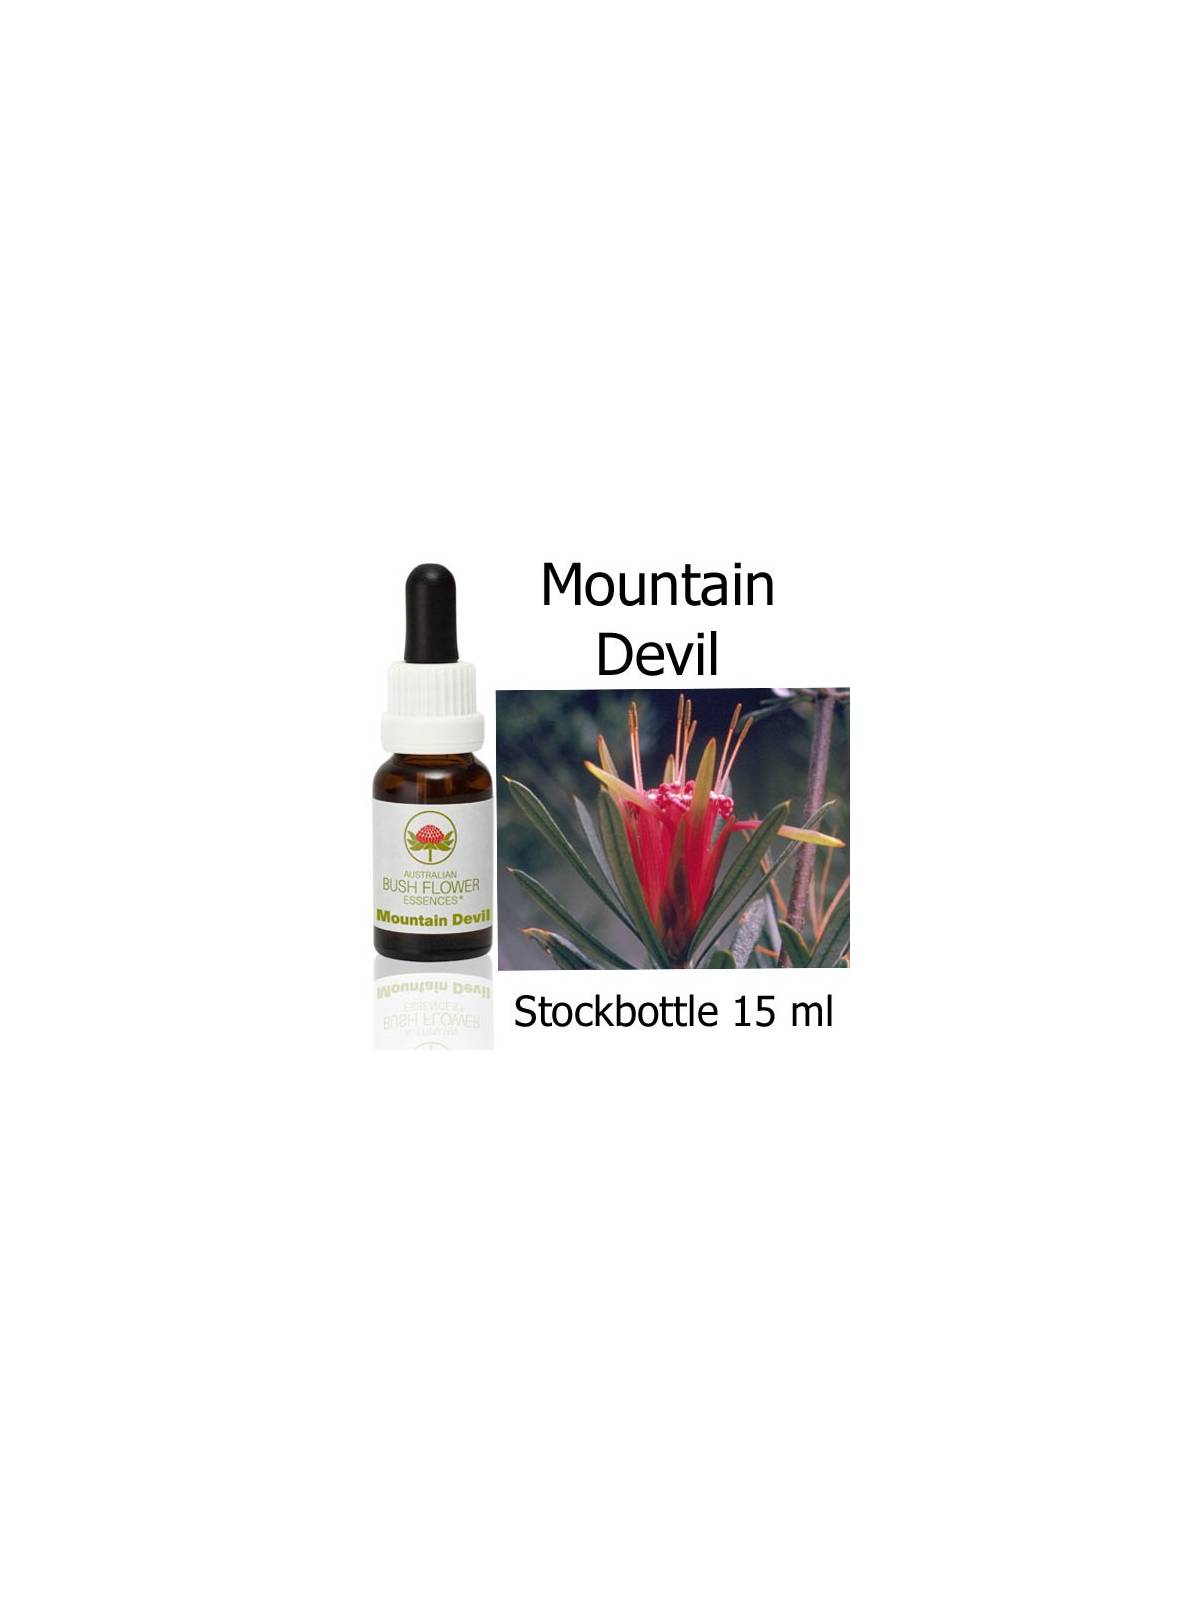 Fiori Australiani Stockbottles Mountain Devil Australian Bush Flower Essences